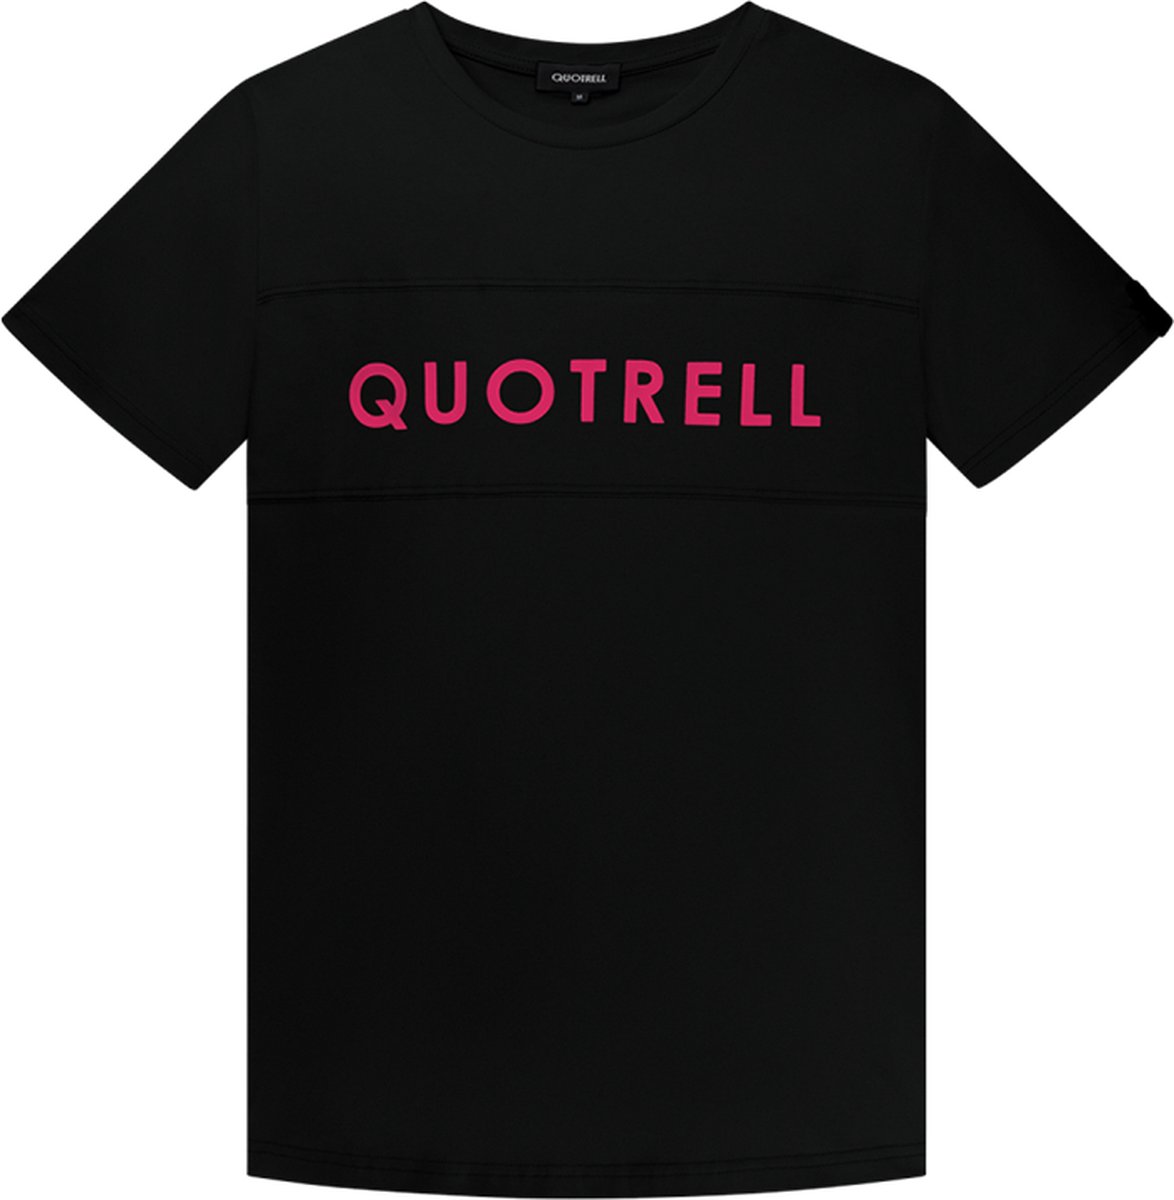 Quotrell san jose t shirt black / fuchsia